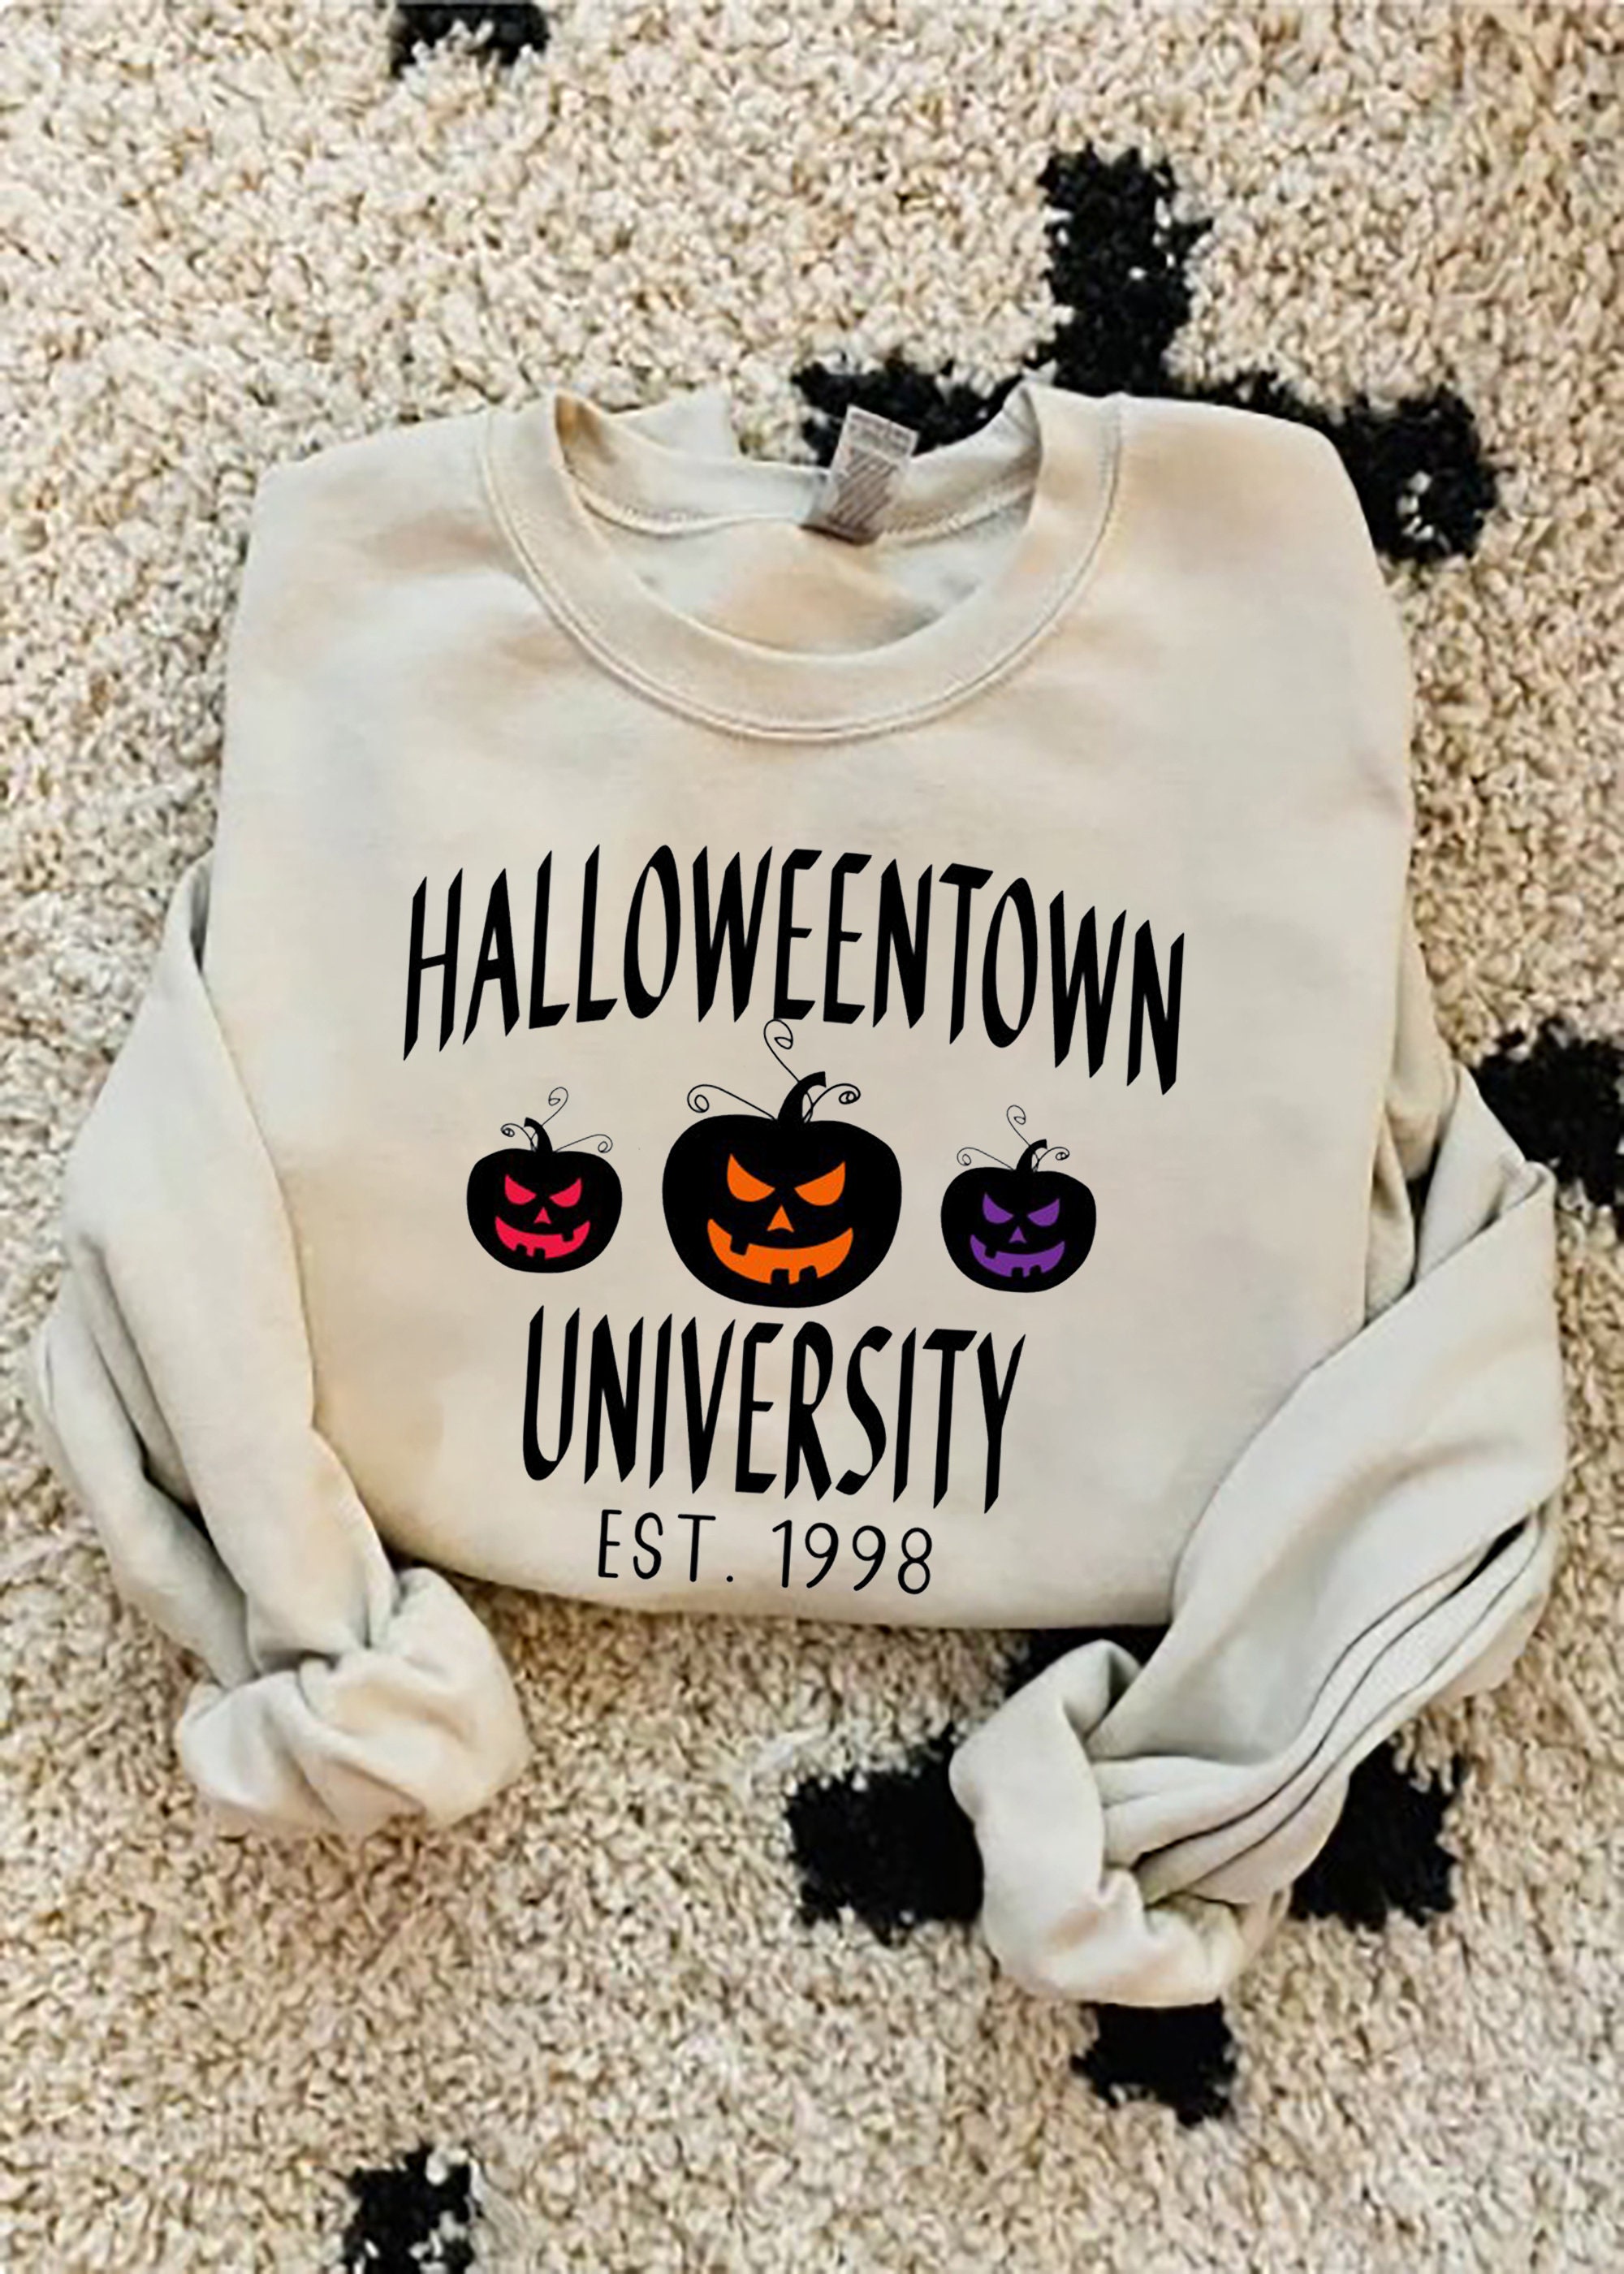 Halloweentown University Est 1998 Sweatshirt Halloweentown University Sweatshirts Pumpkin Halloweentown Shirt Halloweentown Shirt Falls